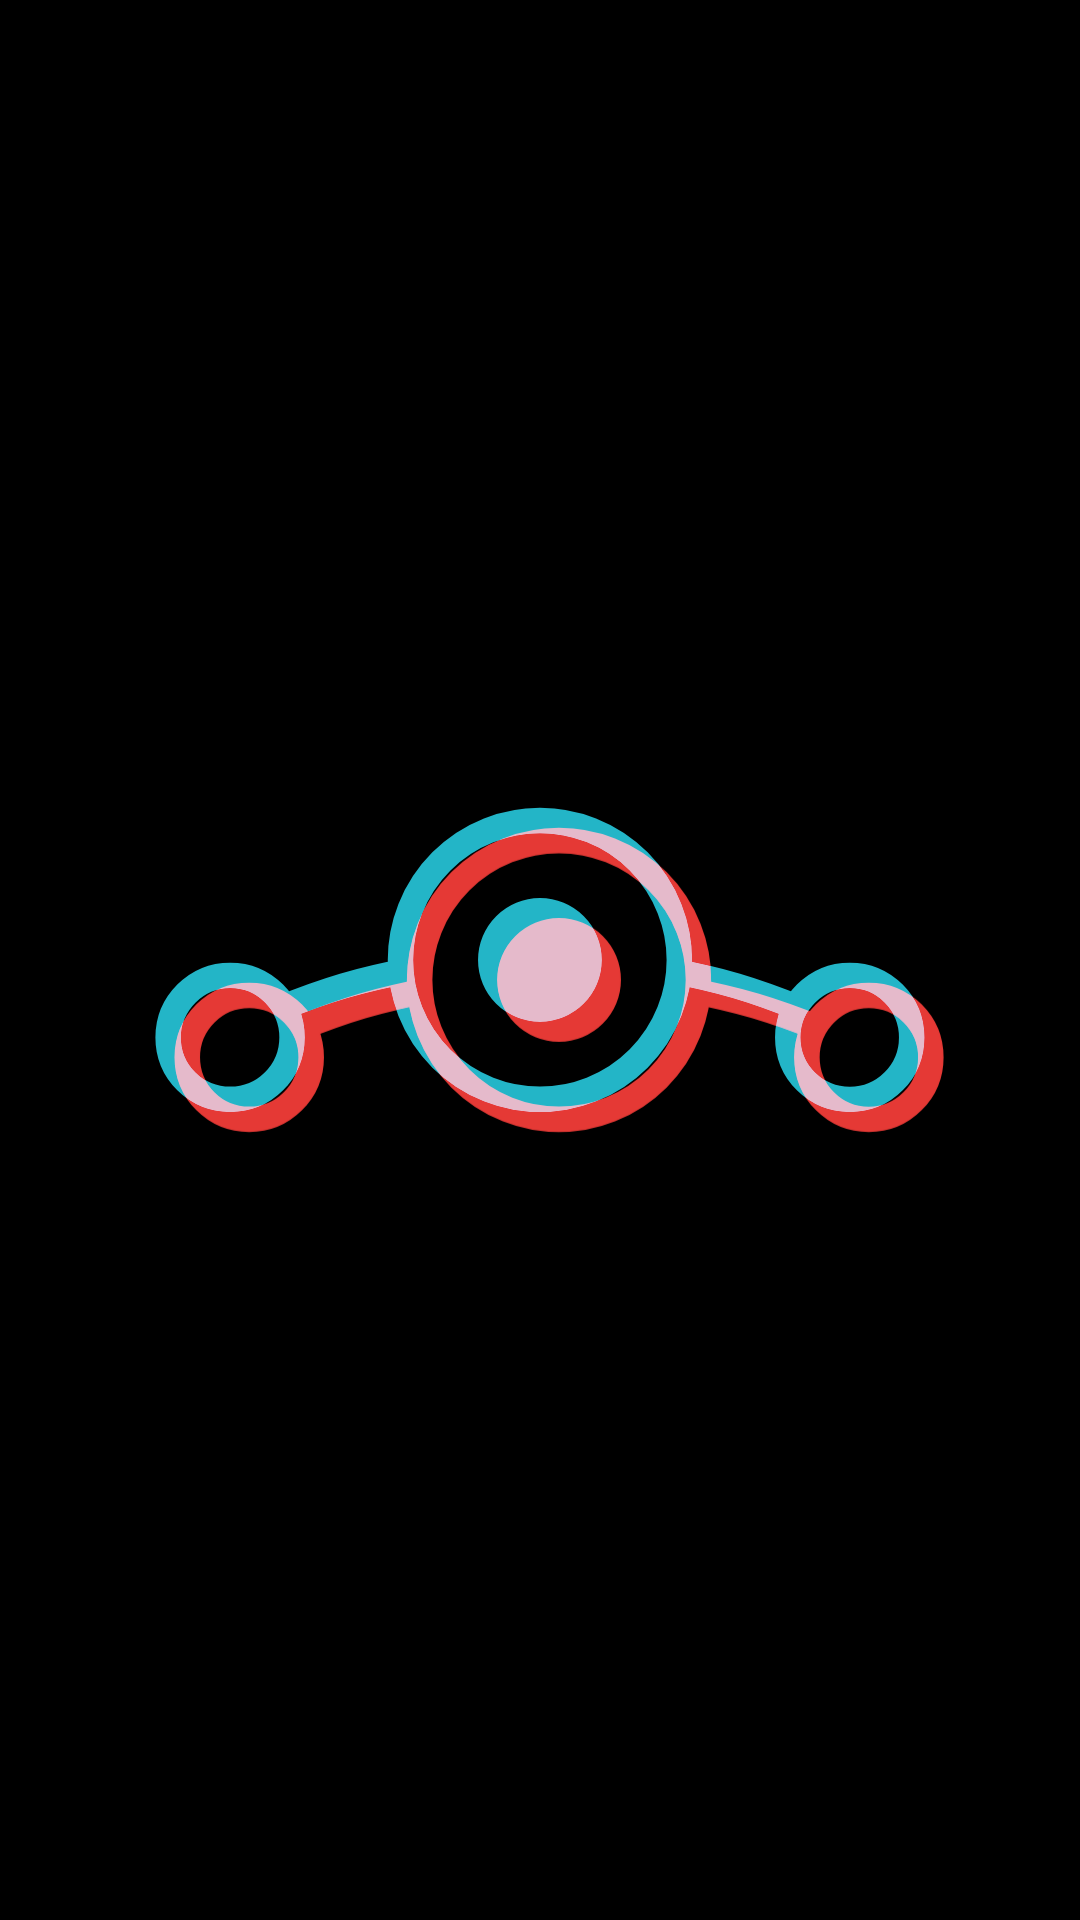 Black Lineage OS Android Operating System Symbols Logo Minimalism Digital 1080x1920